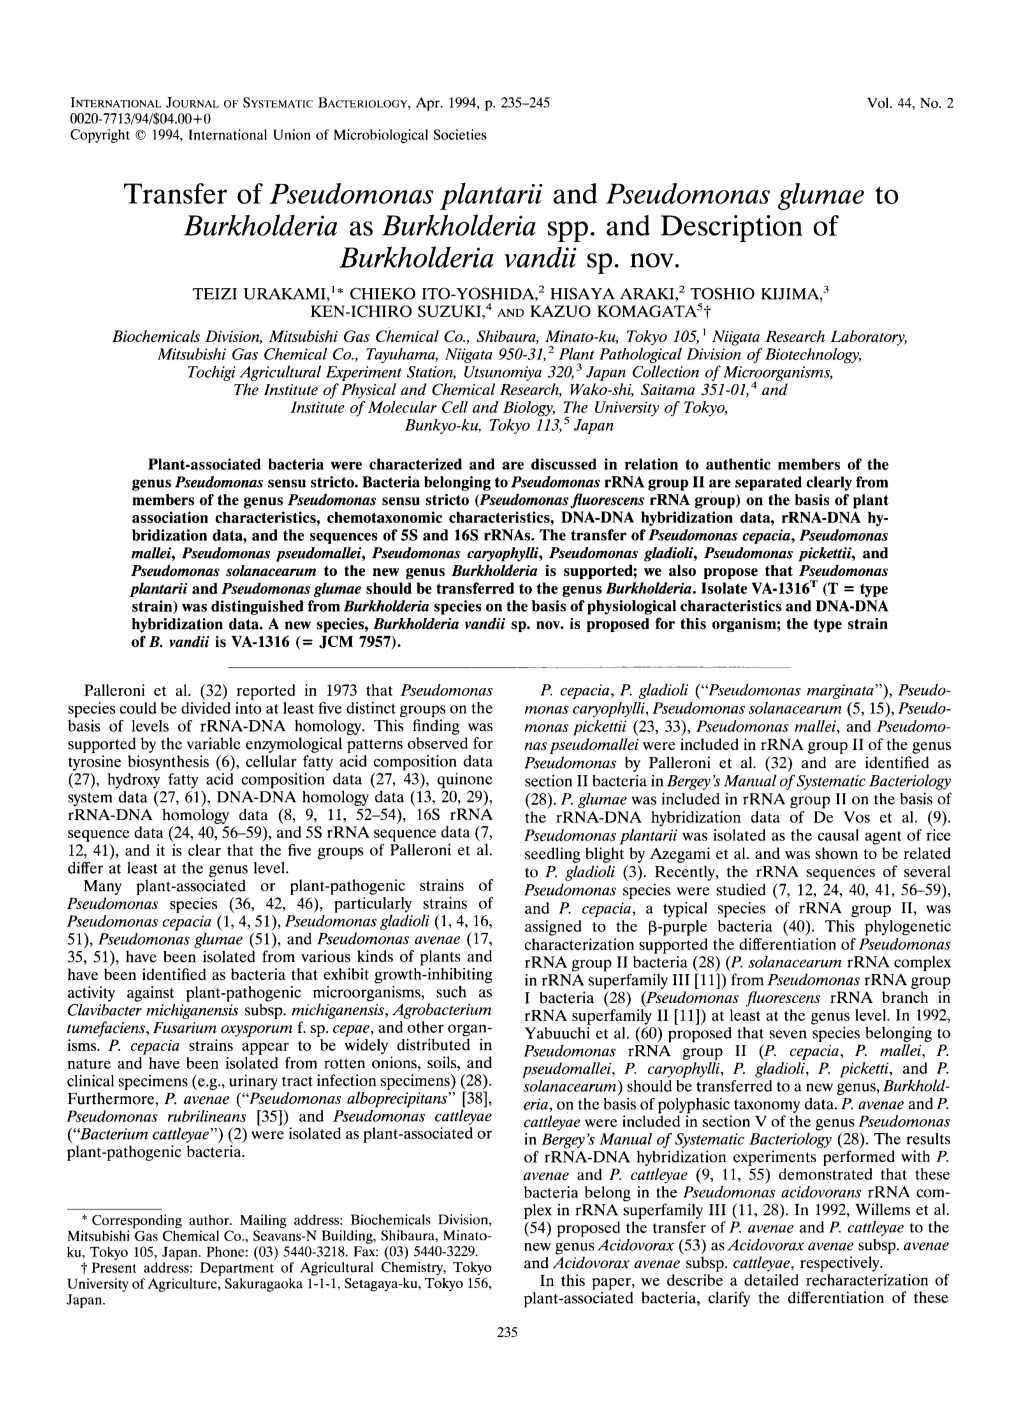 Transfer of Pseudomonas Plantarii and Pseudomonas Glumae to Burkholderia As Burkholderia Spp